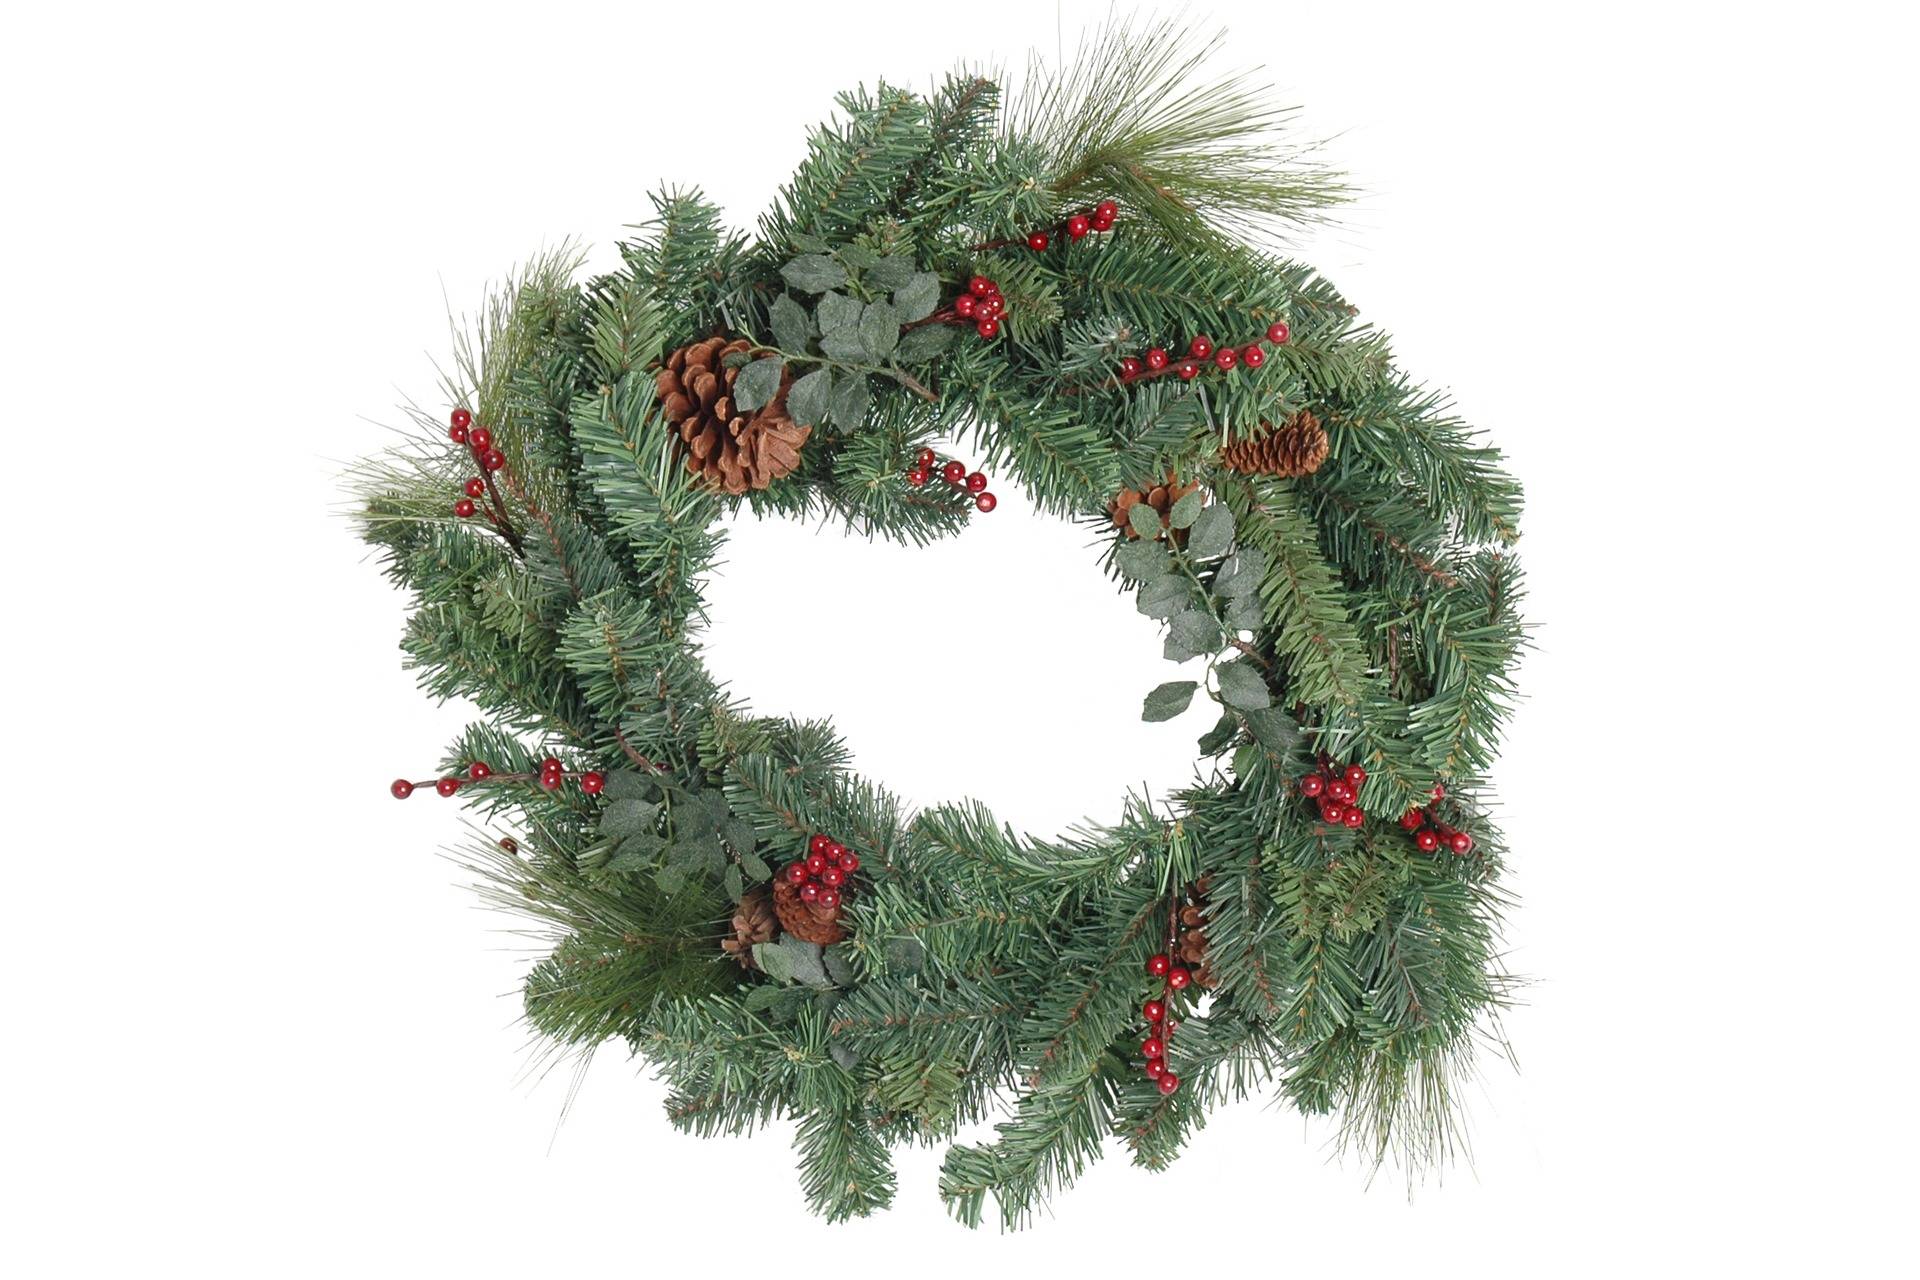 Buy holiday wreaths, benefit Friday Harbor High School seniors